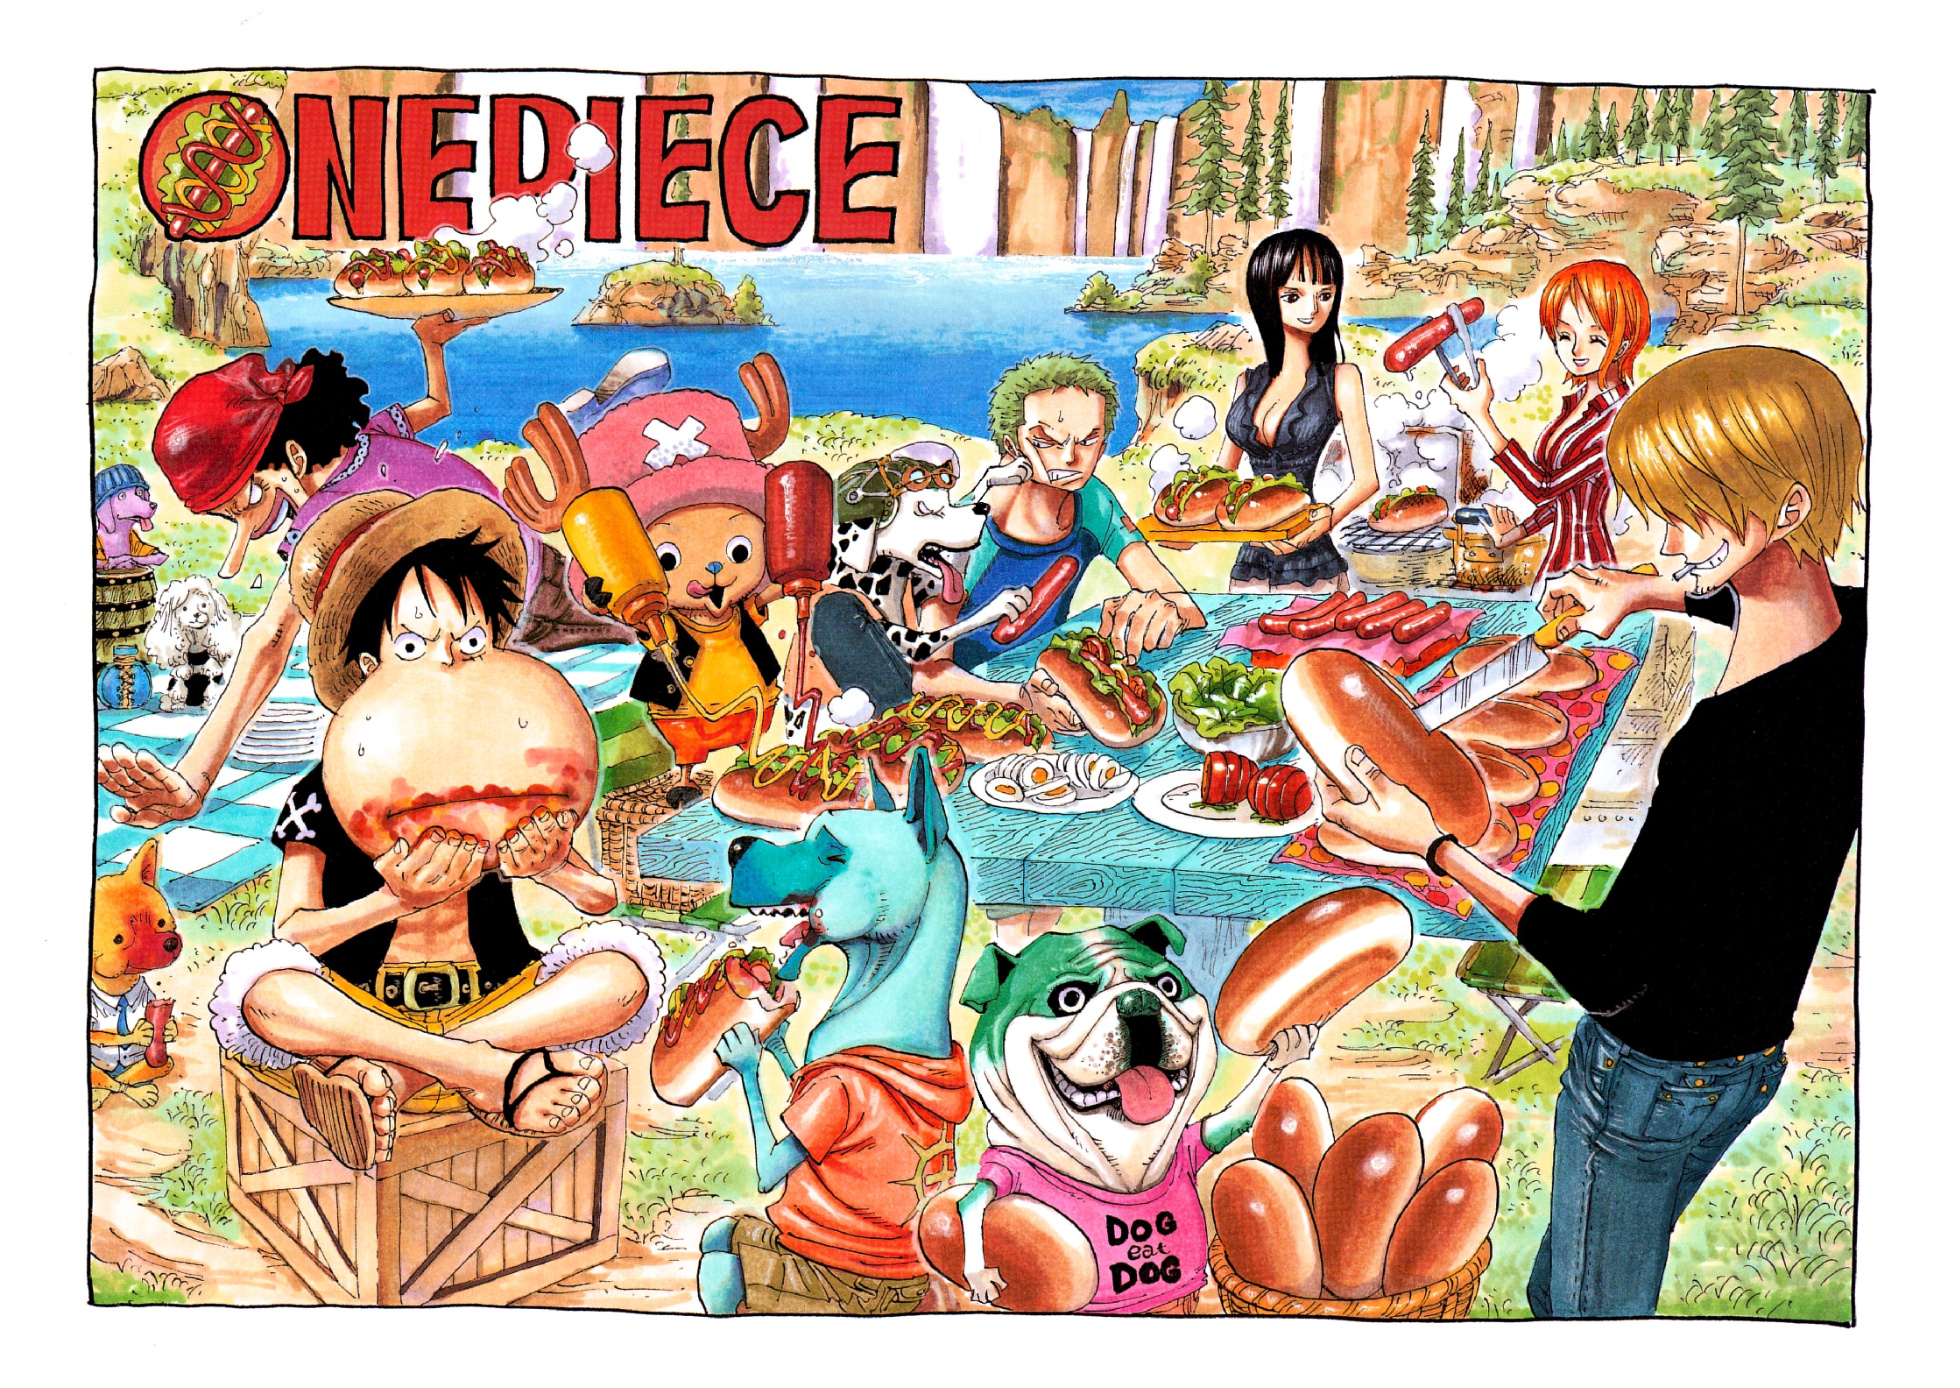 One Piece, Volume 42: Pirates vs. CP9 by Eiichiro Oda